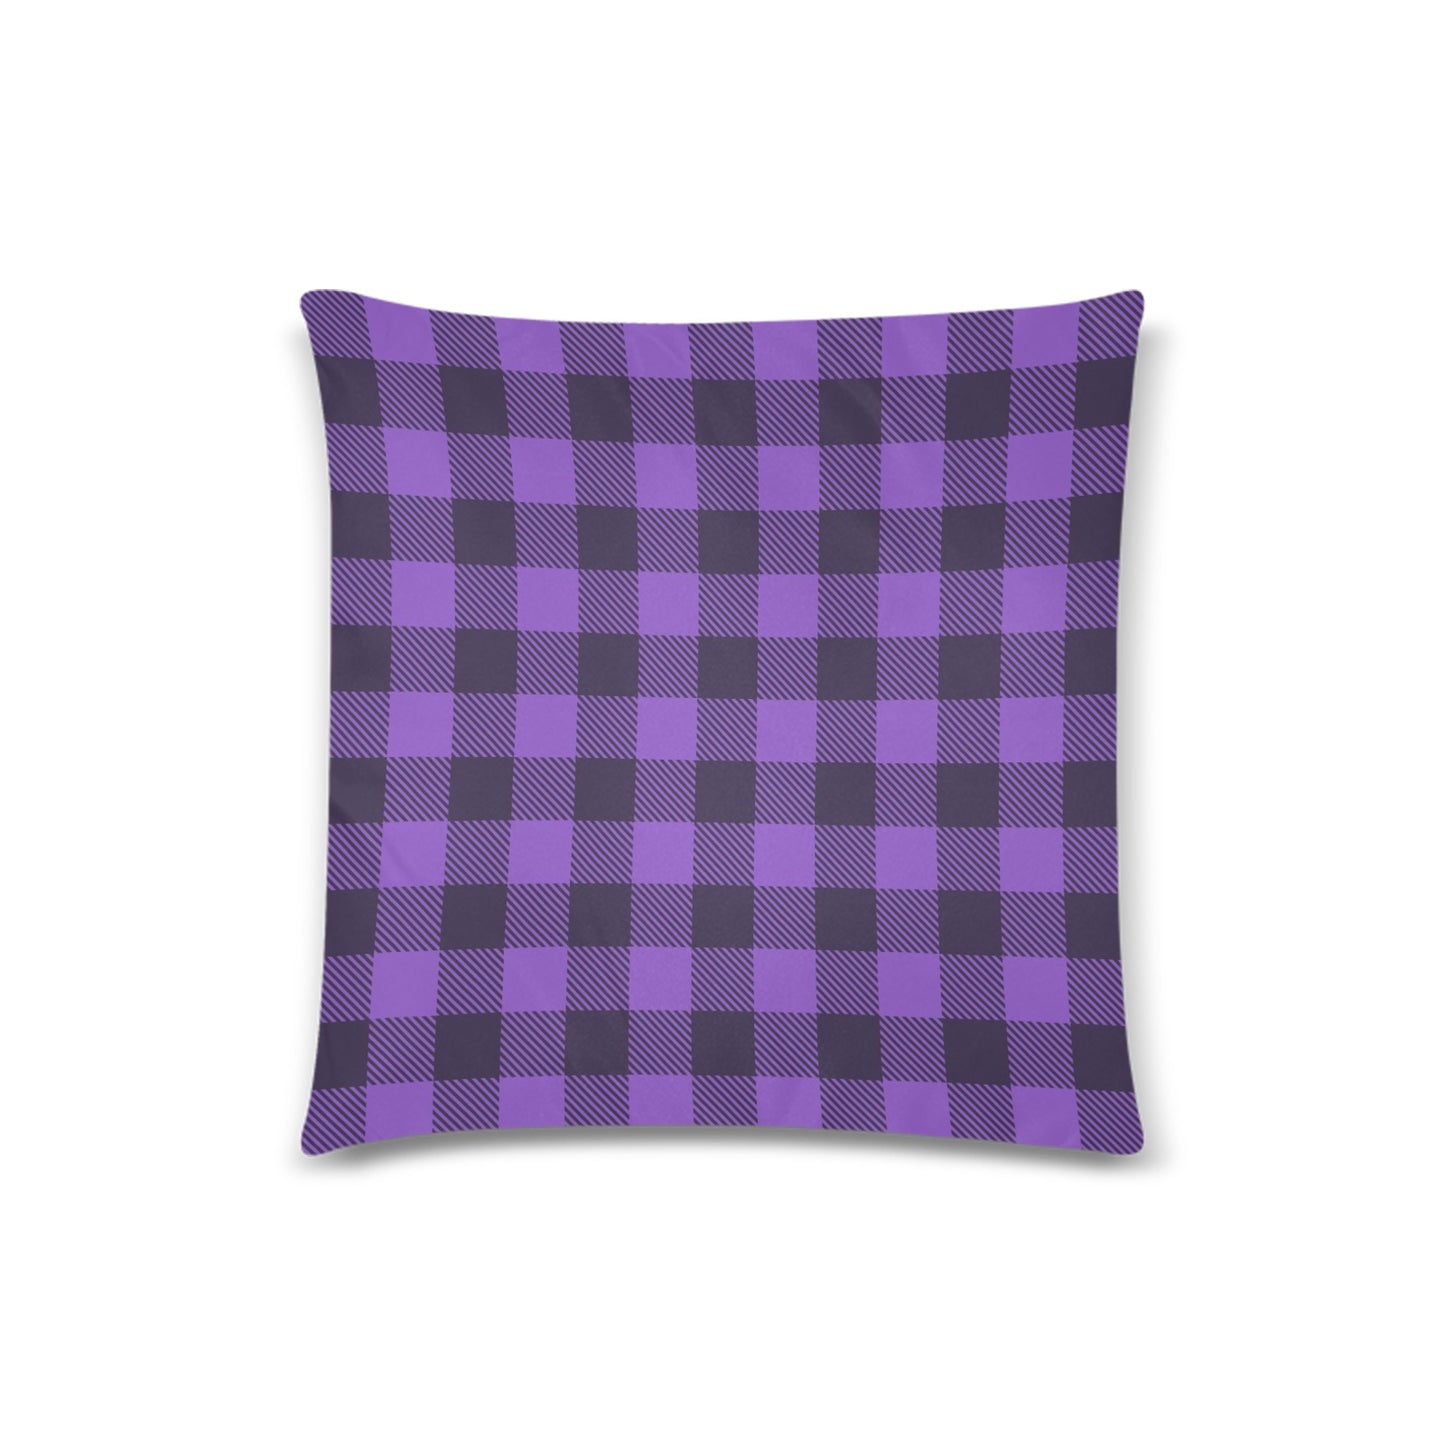 Purple Plaid Throw Pillow Cover